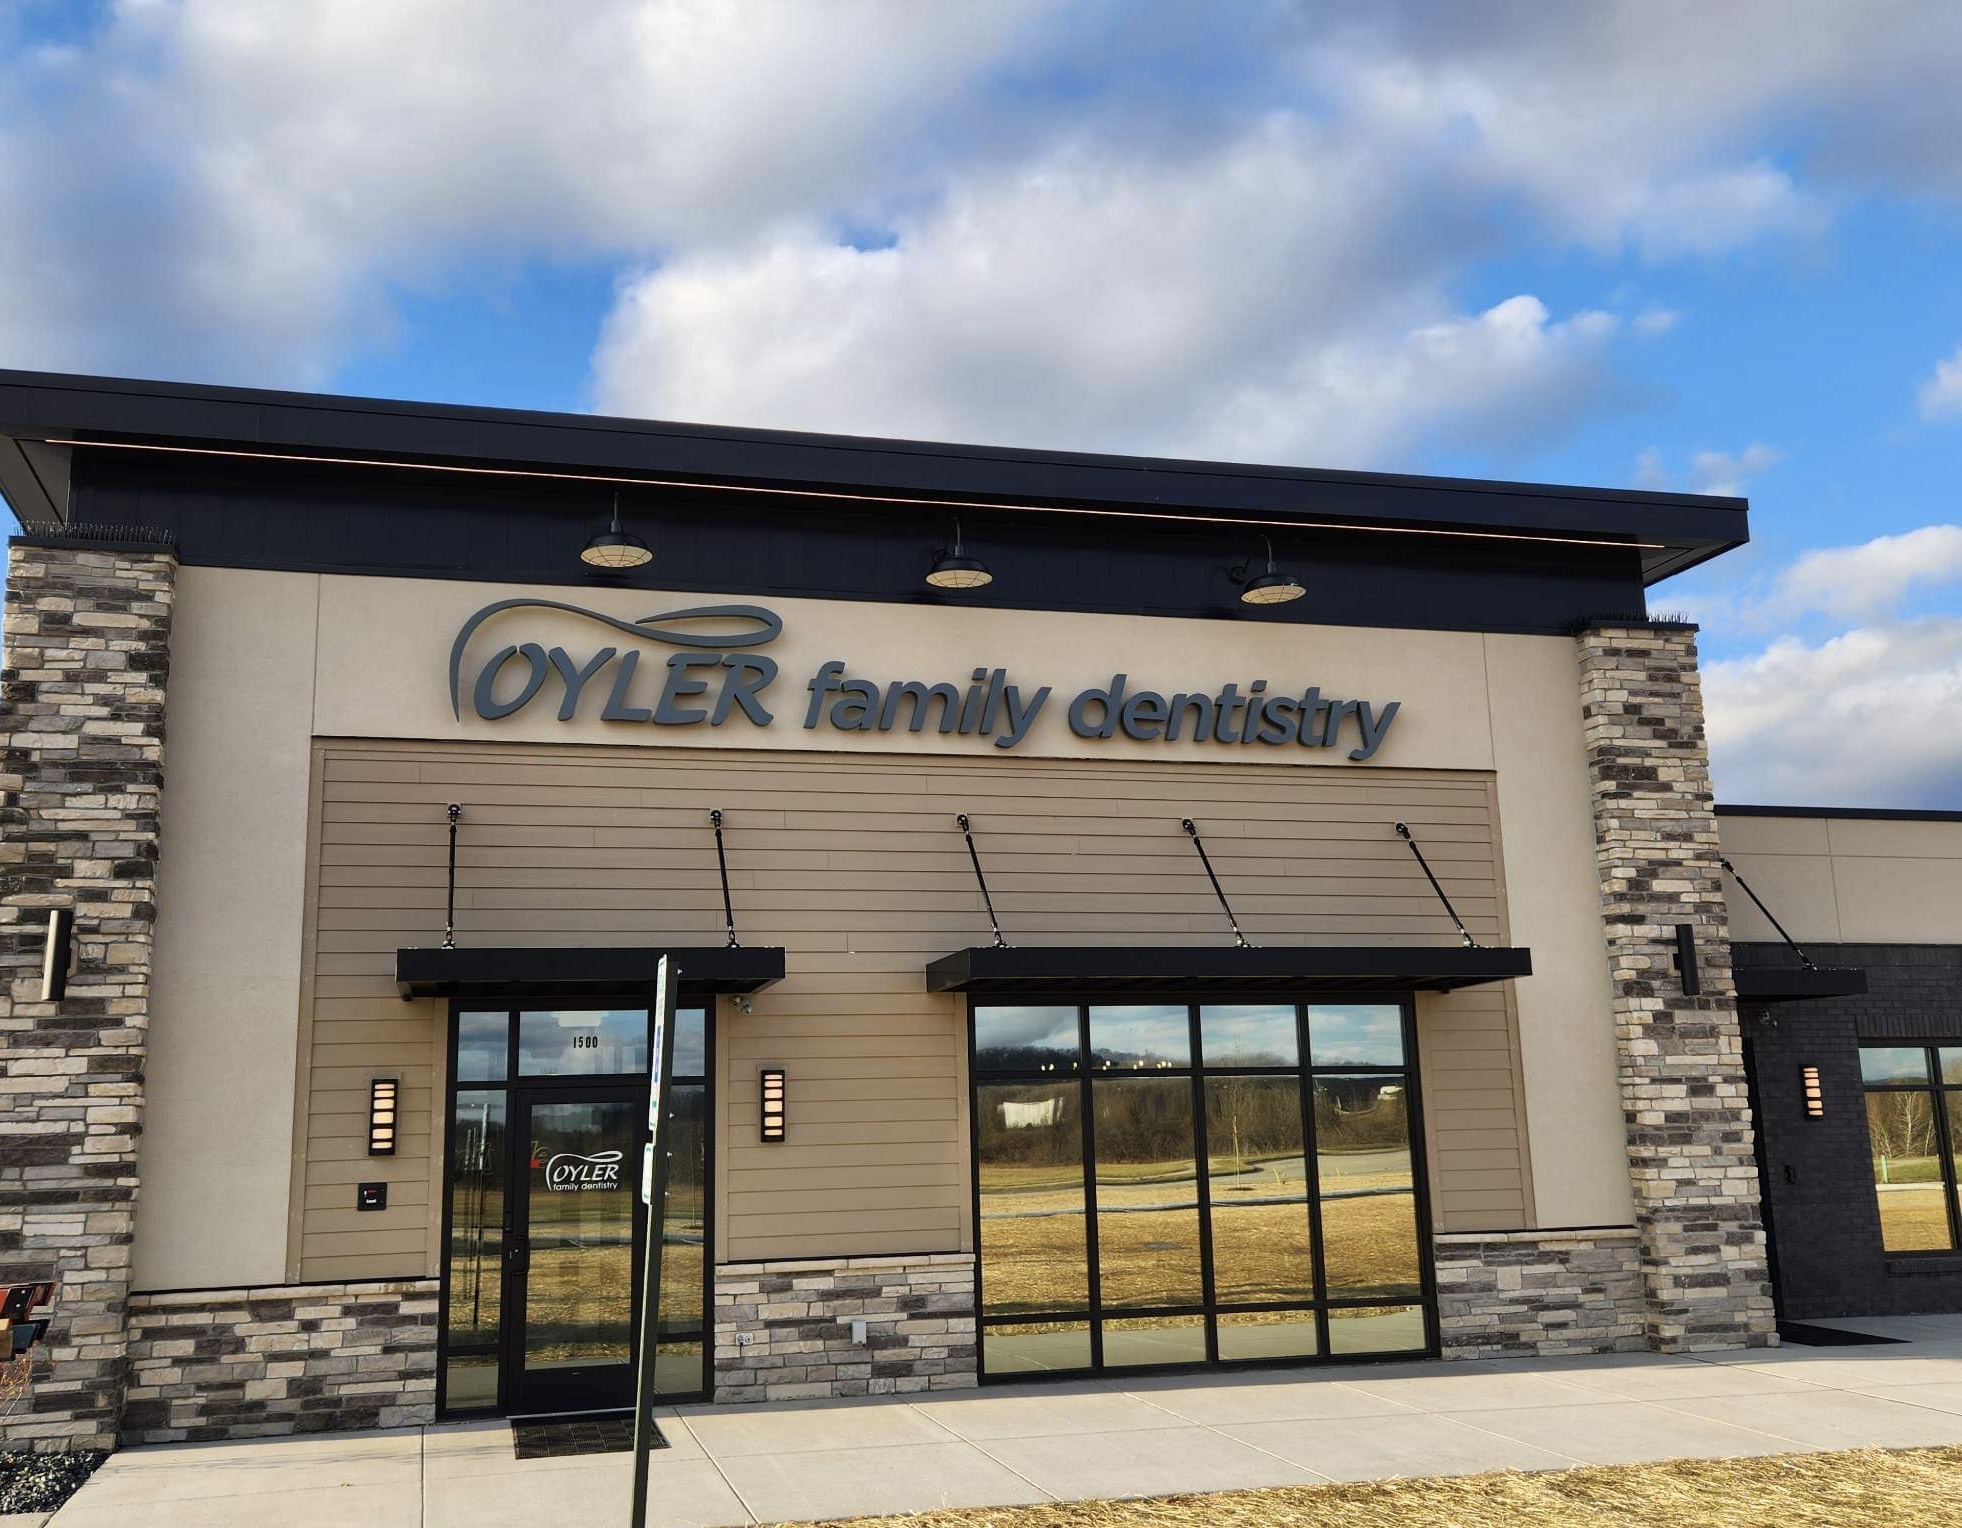 Oyler Family Dentistry 1500 Flossie Dr, Greendale Indiana 47025